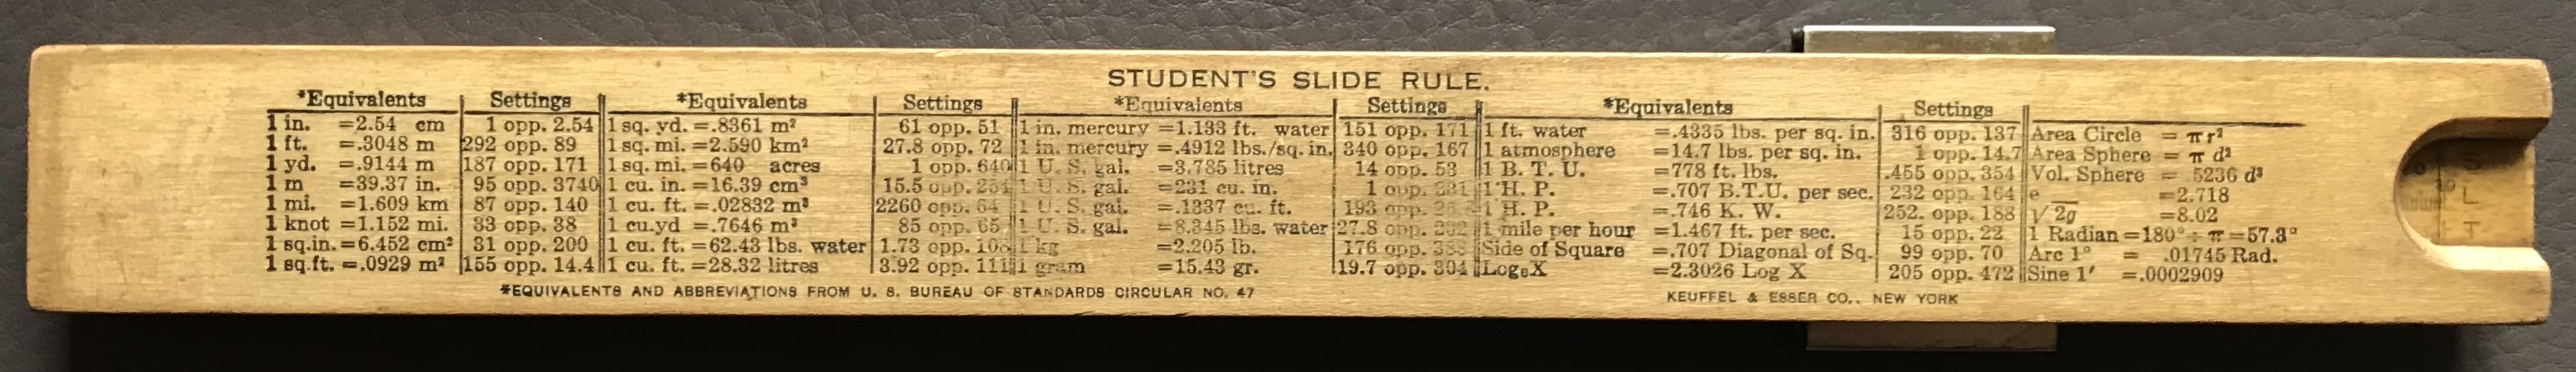 K&E Student’s Rule (back)